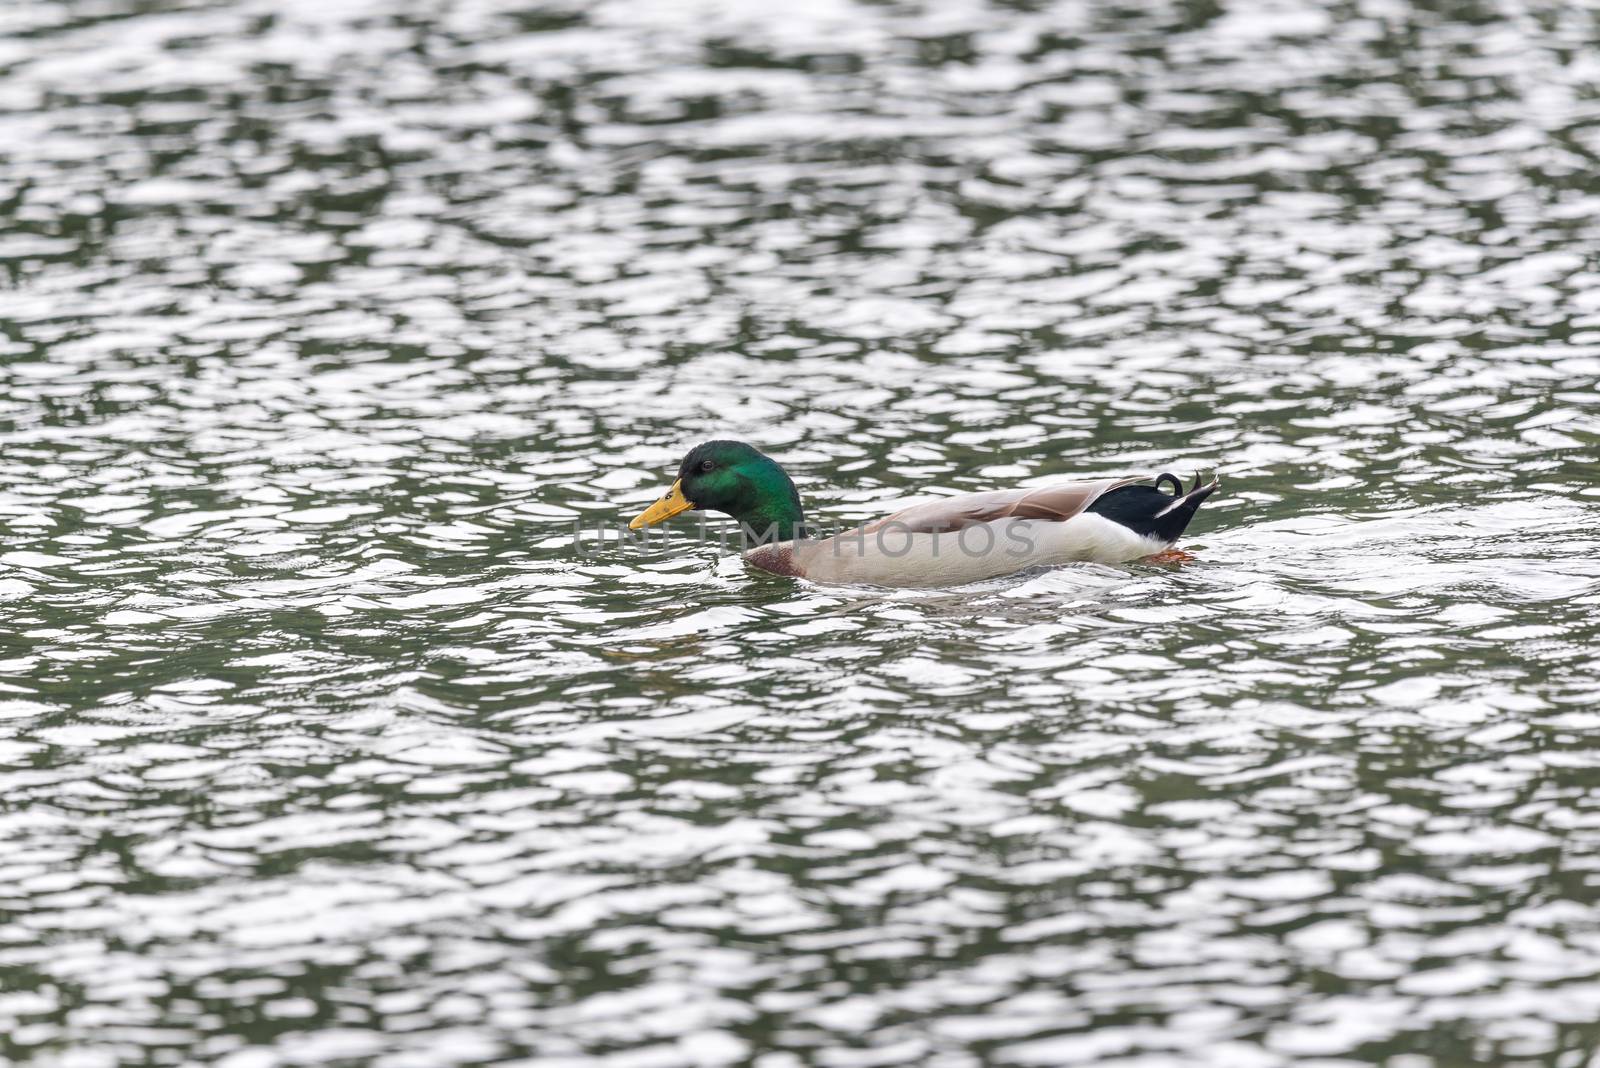 Mallard duck in a lake, Chengdu, China